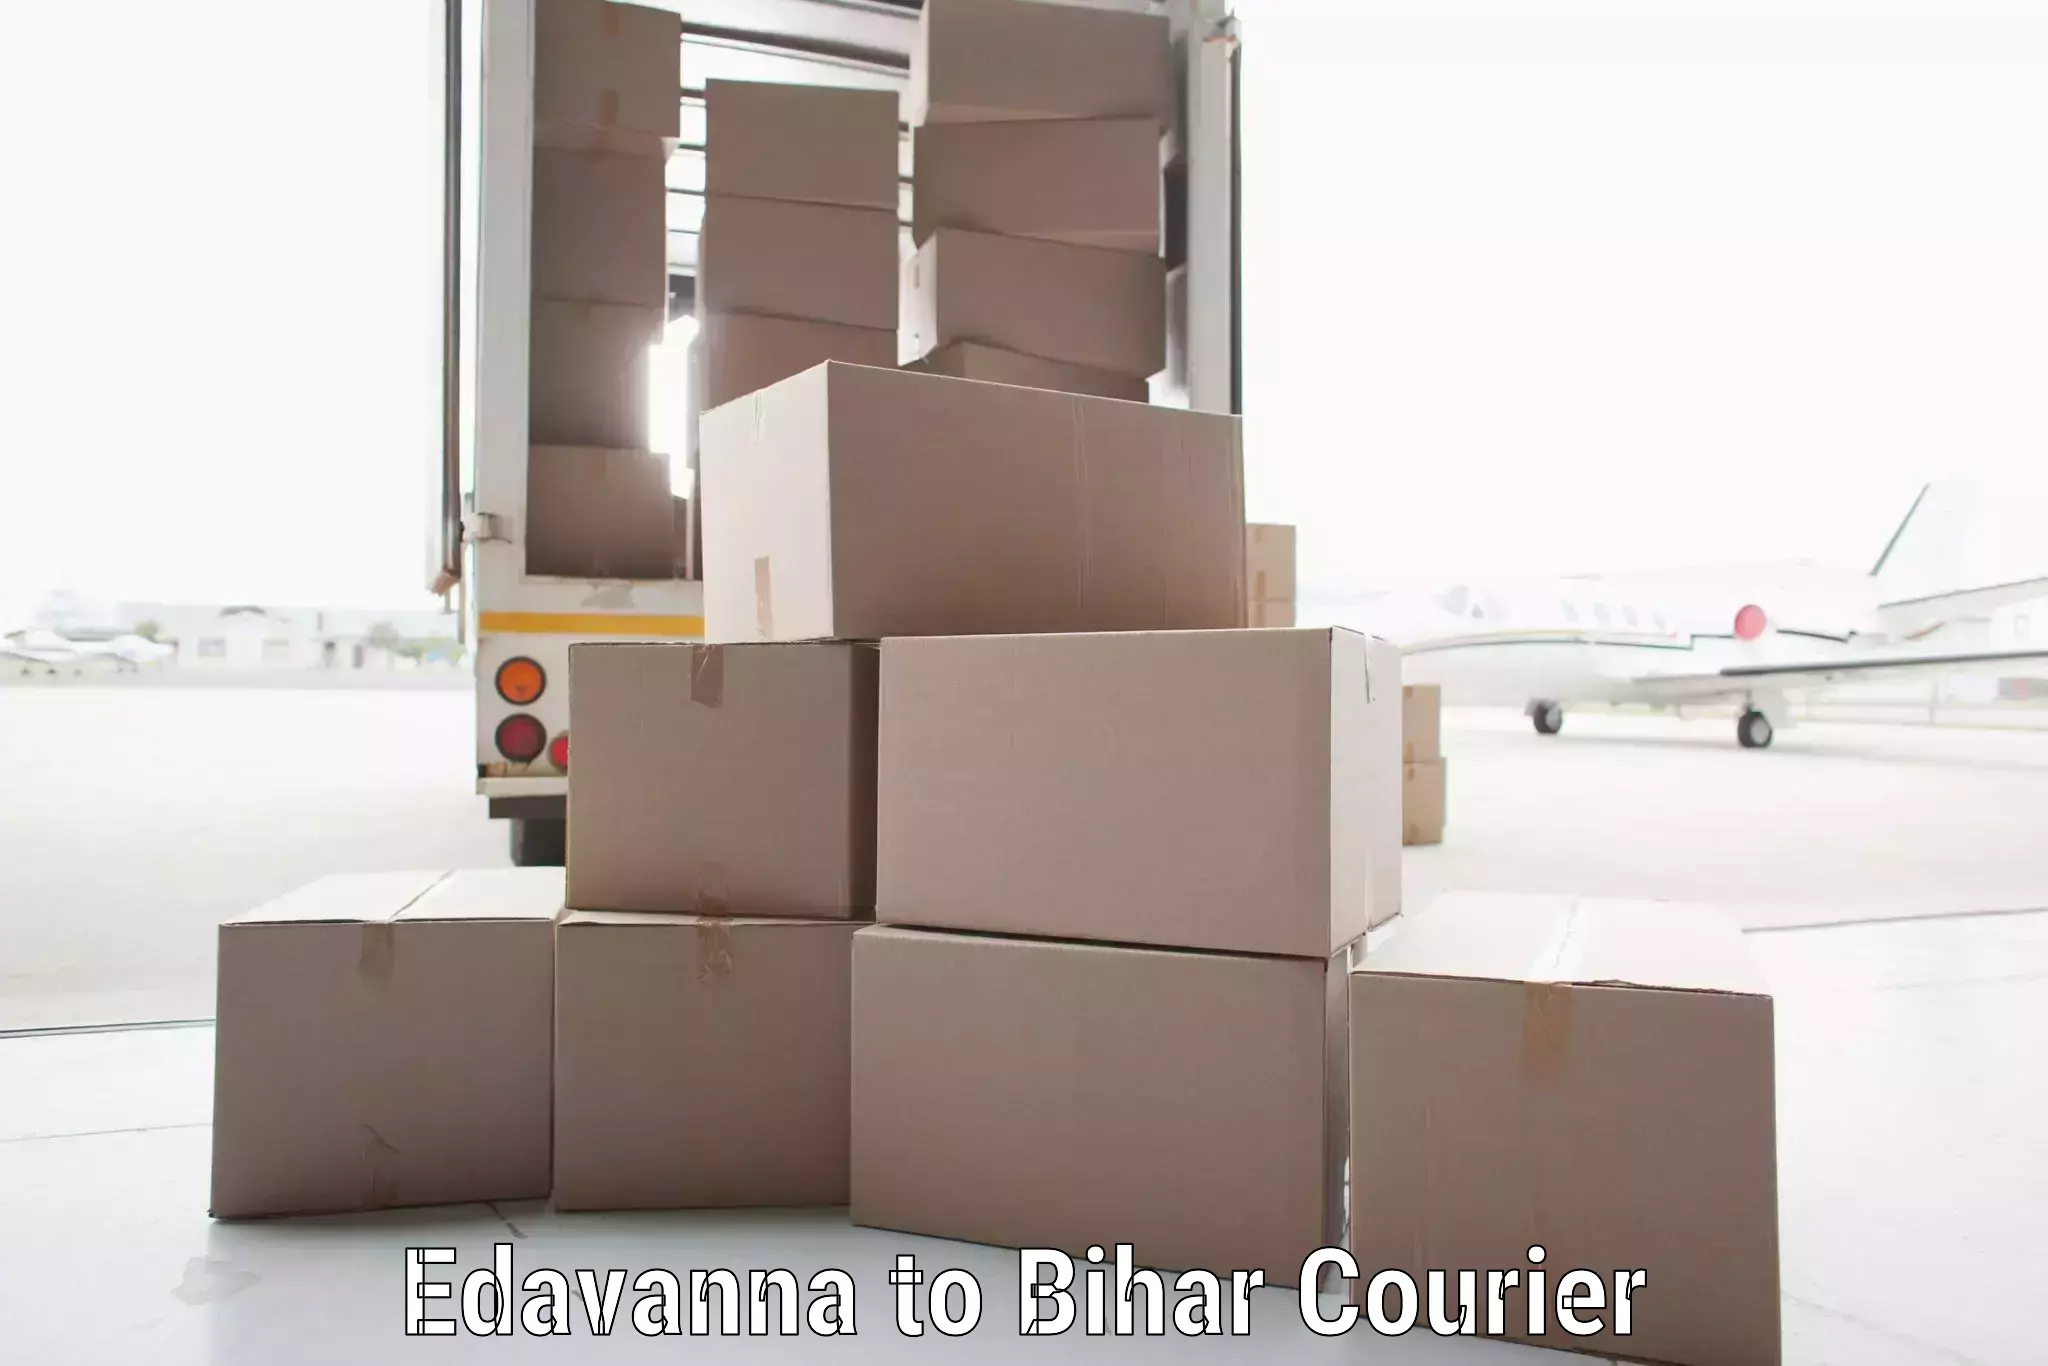 Ocean freight courier Edavanna to Vaishali